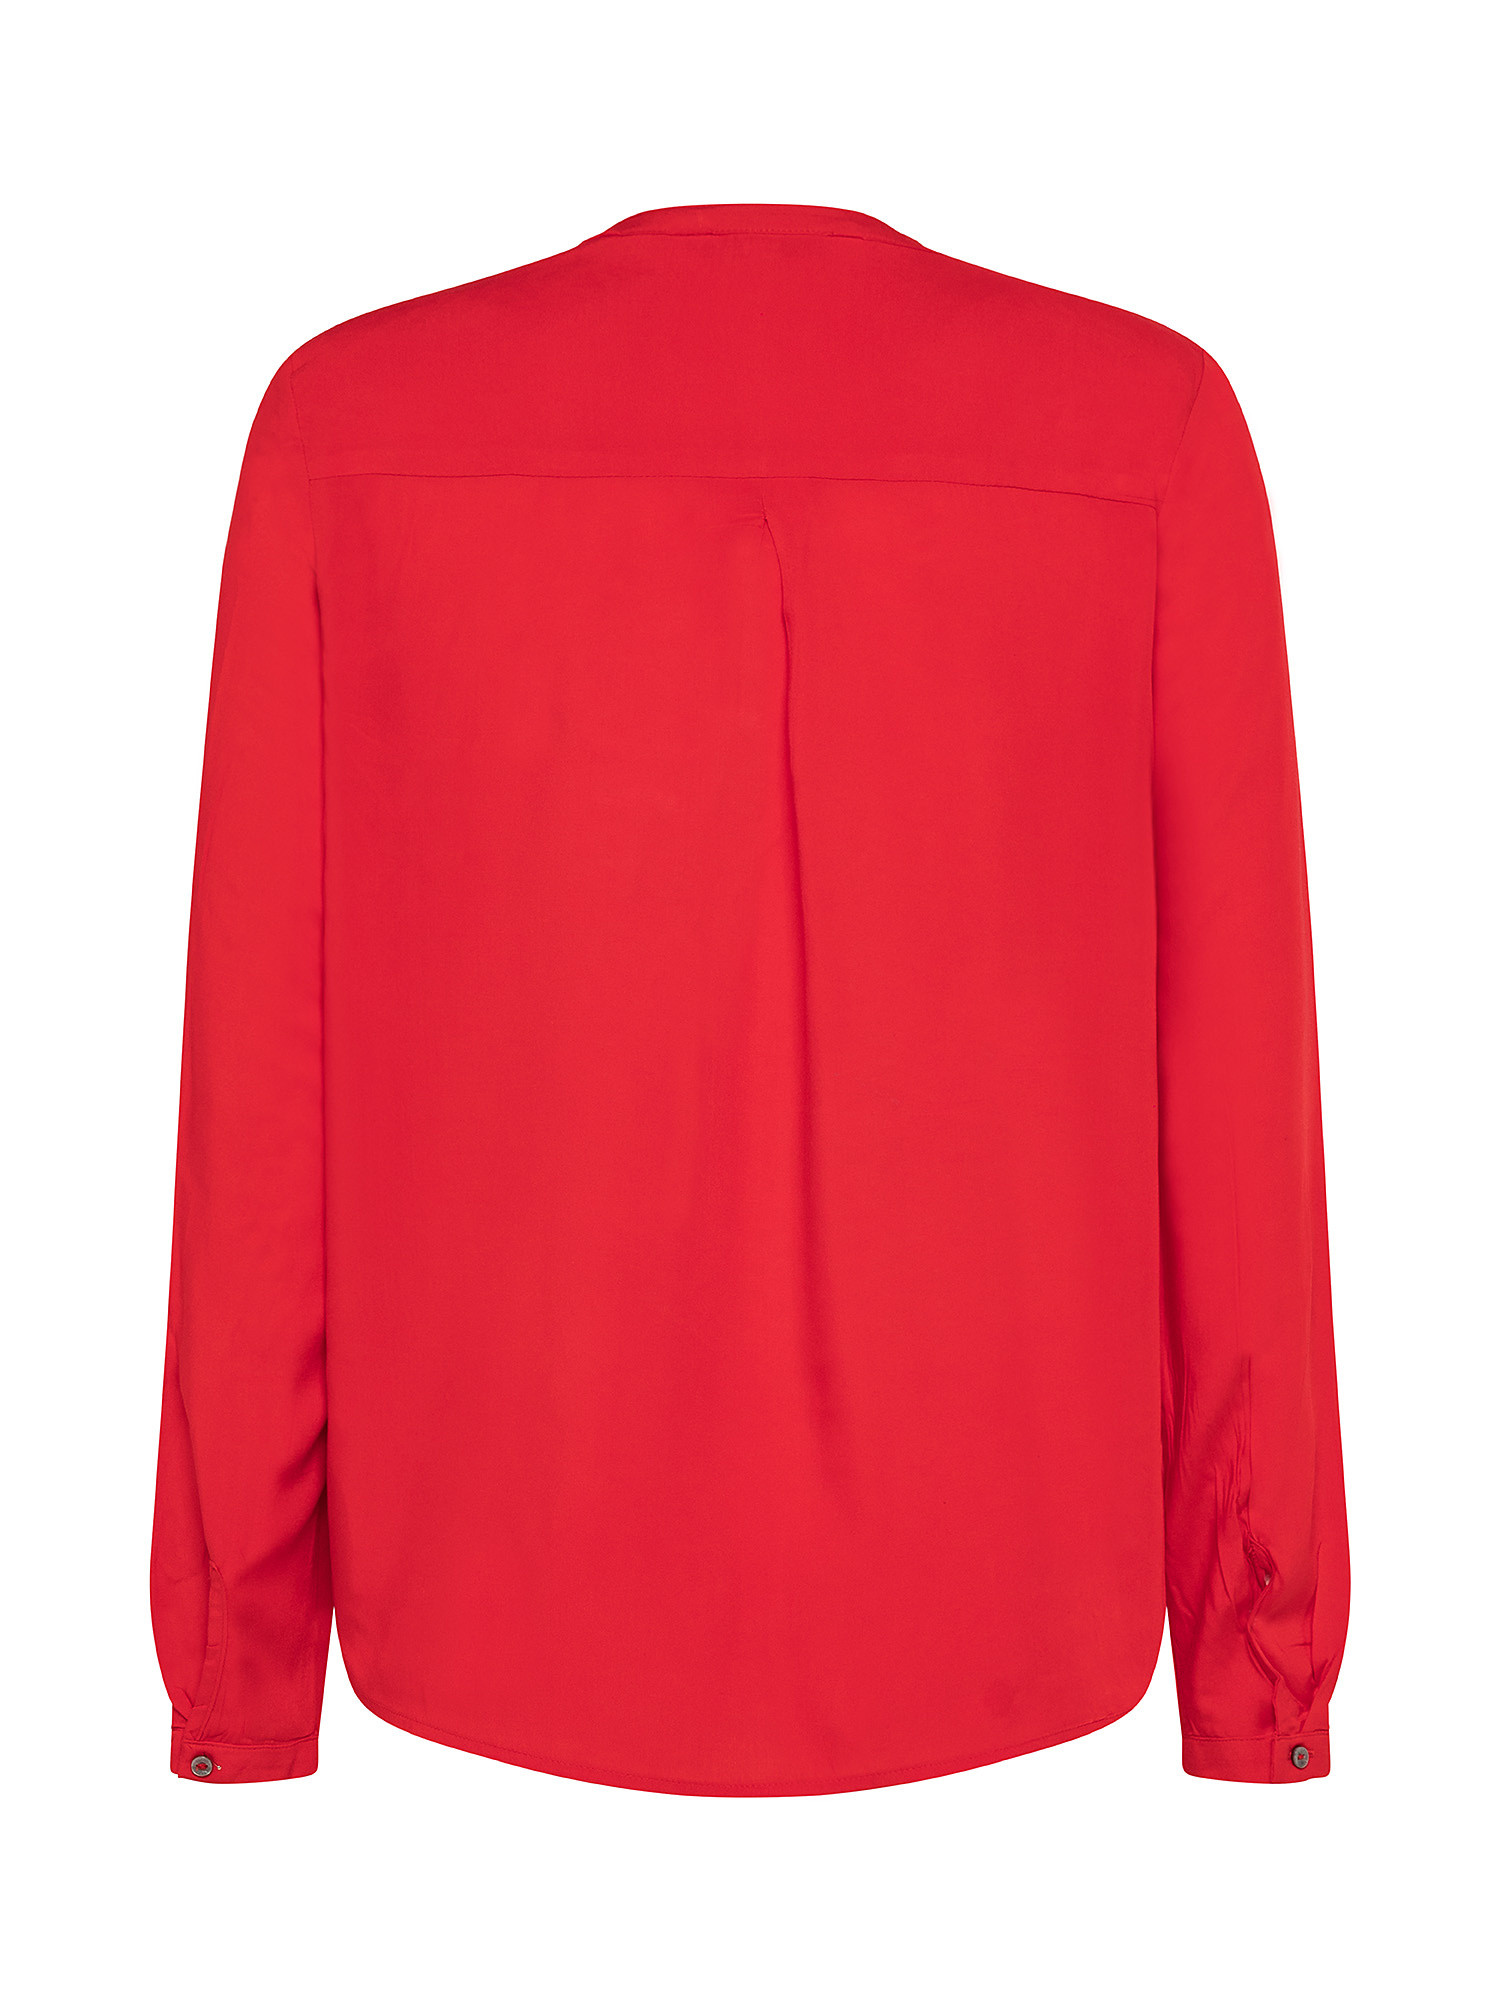 Blusa con maniche regolabili, Rosso, large image number 1